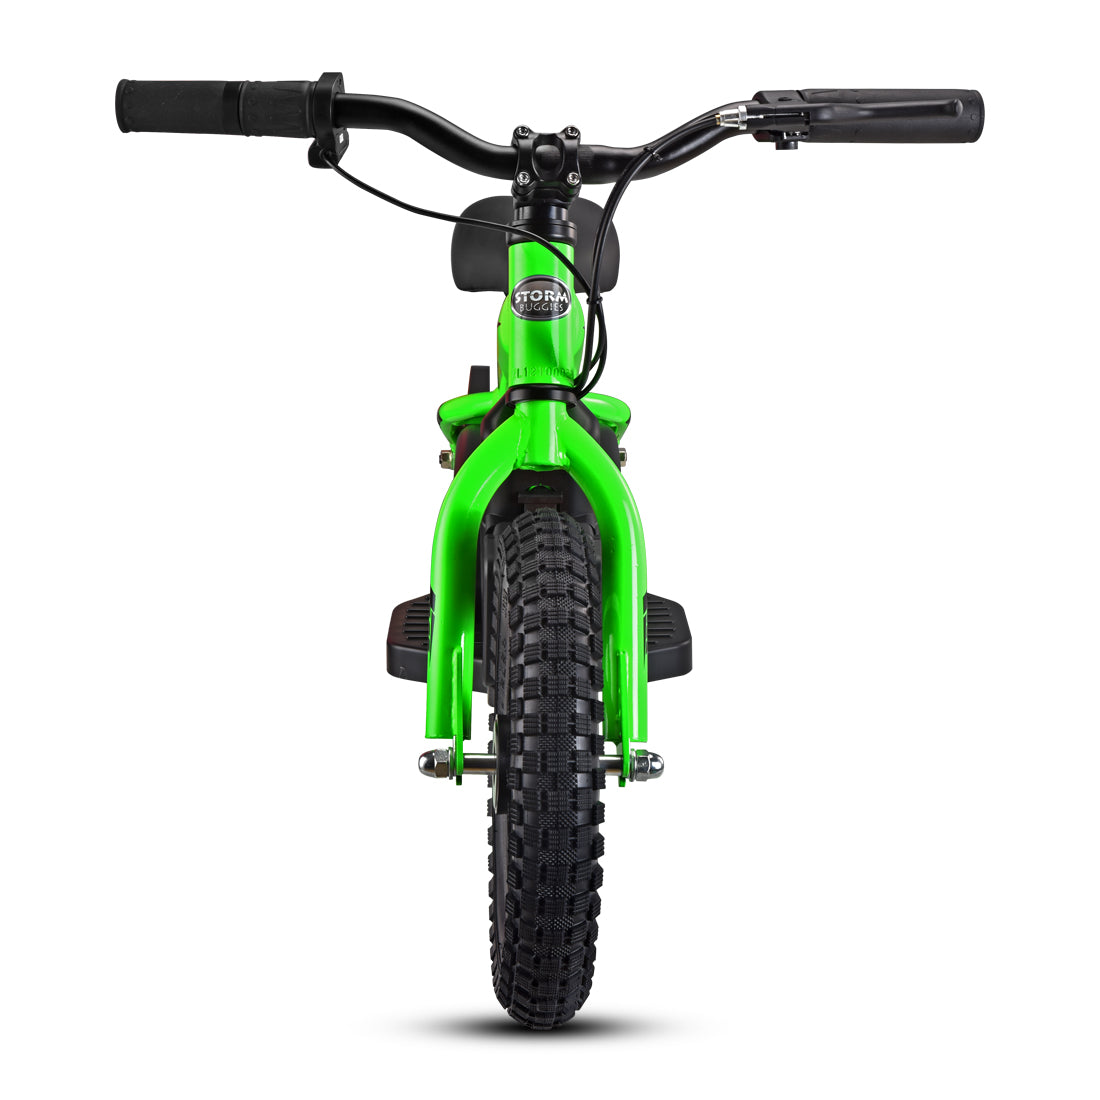 Storm Kids 100w 12" Electric Balance Bike - Green